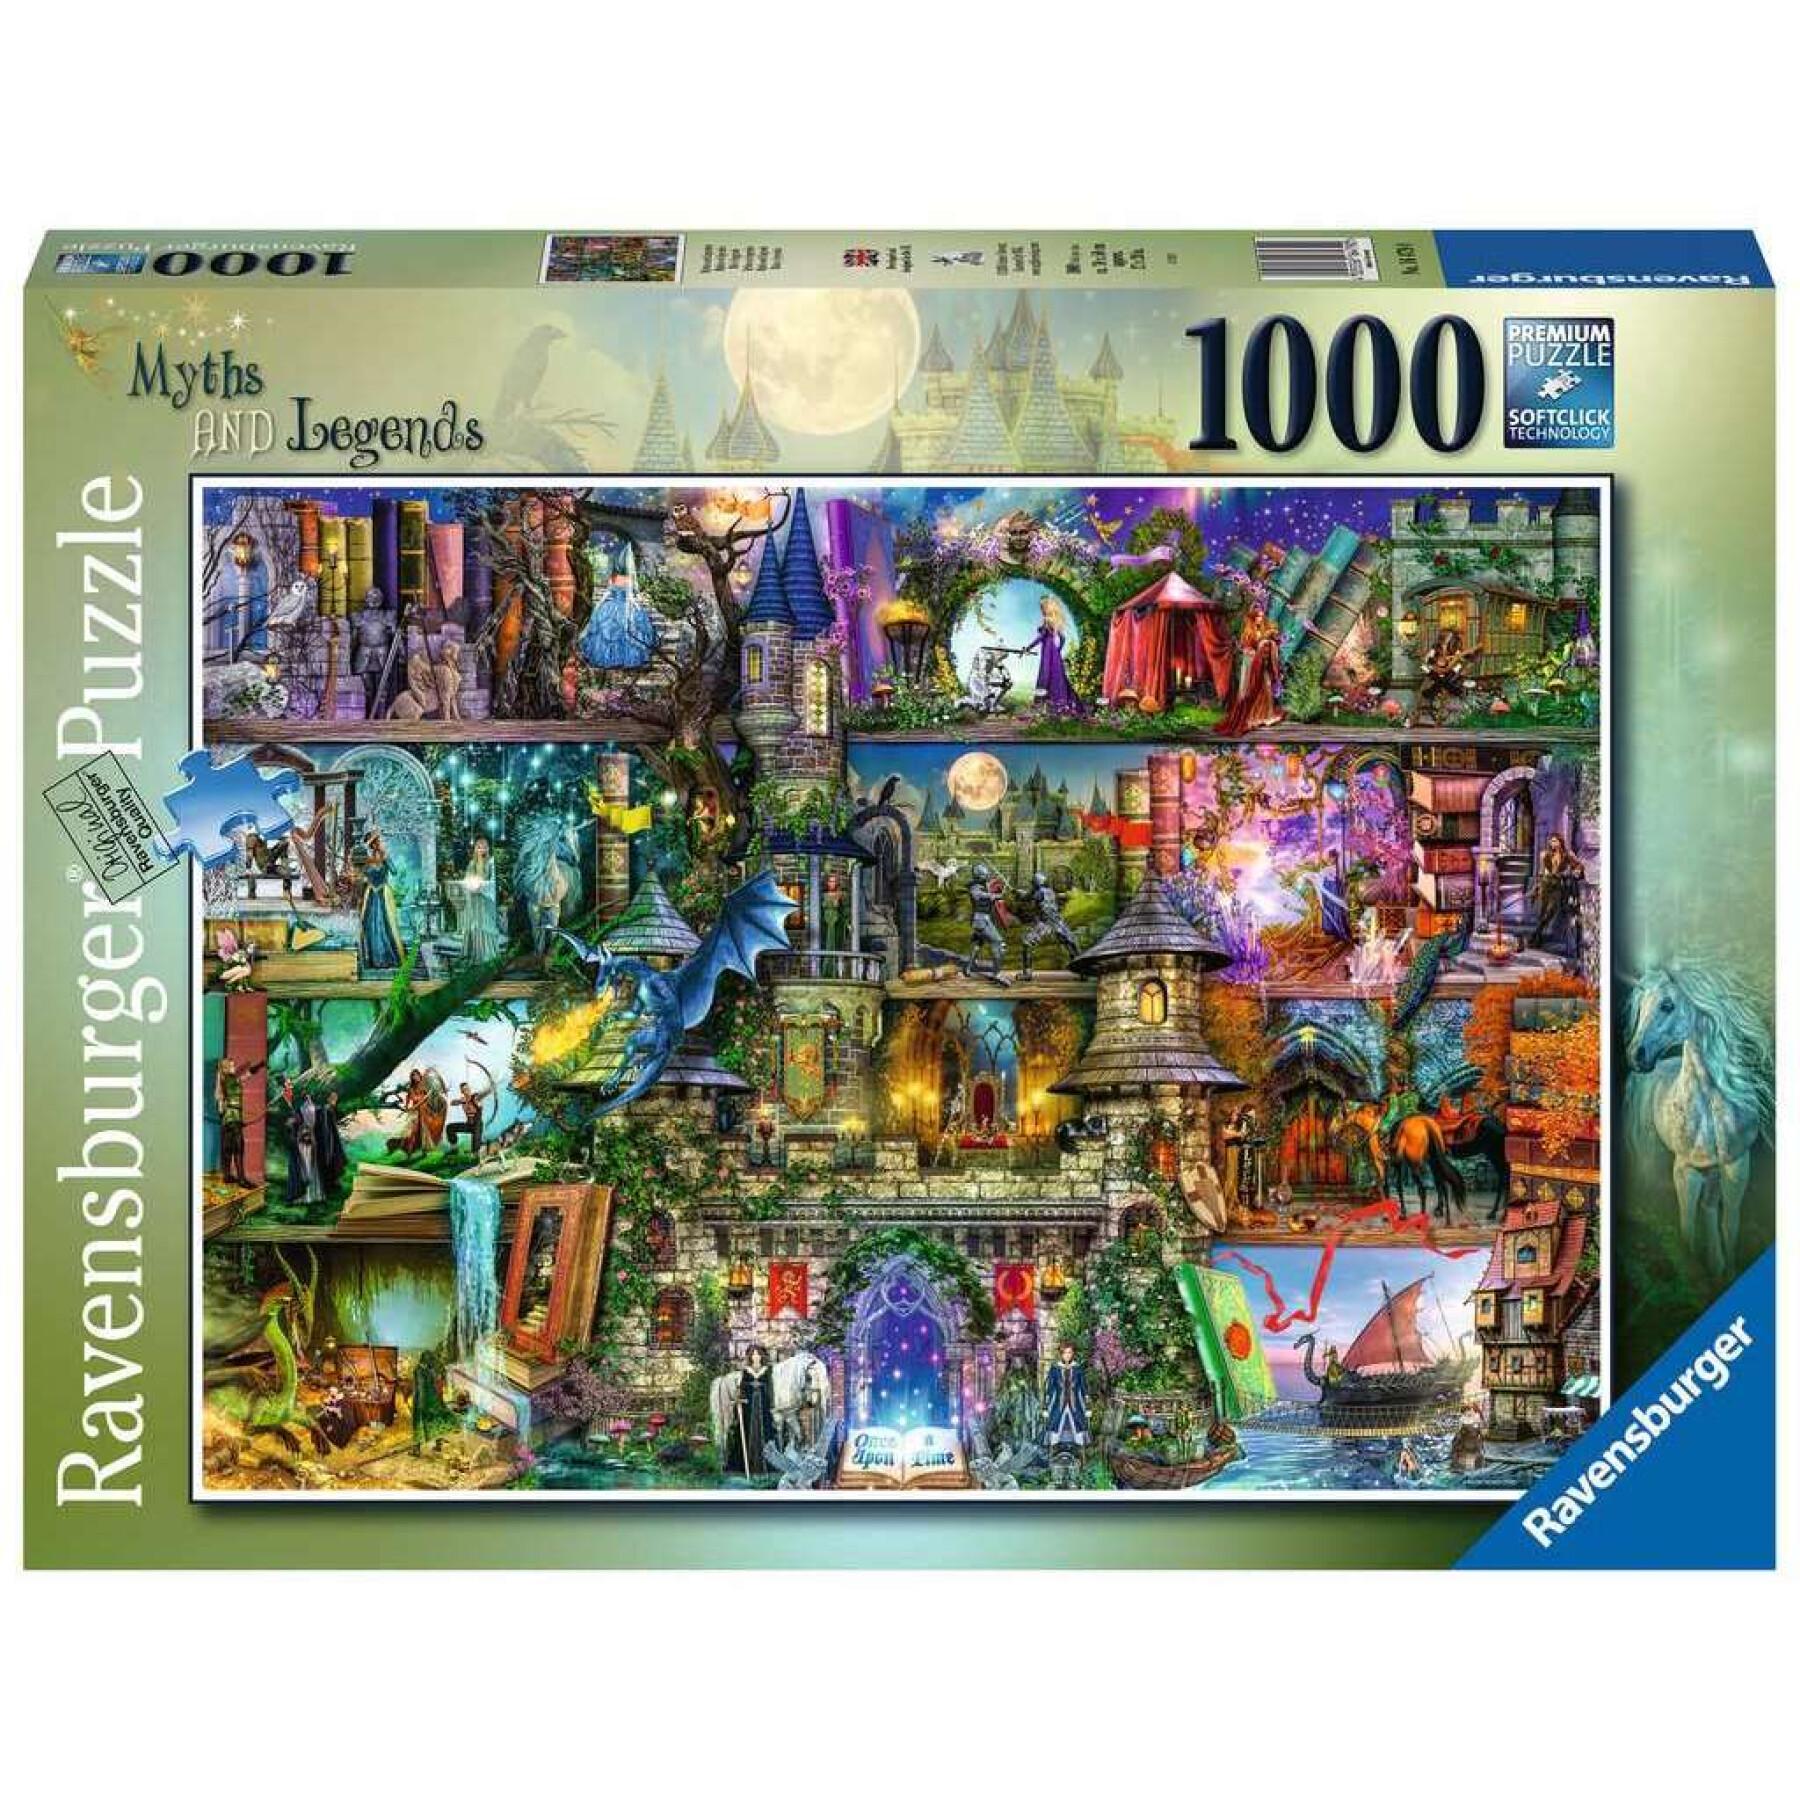 1000 pieces puzzle myths and legends Ravensburger